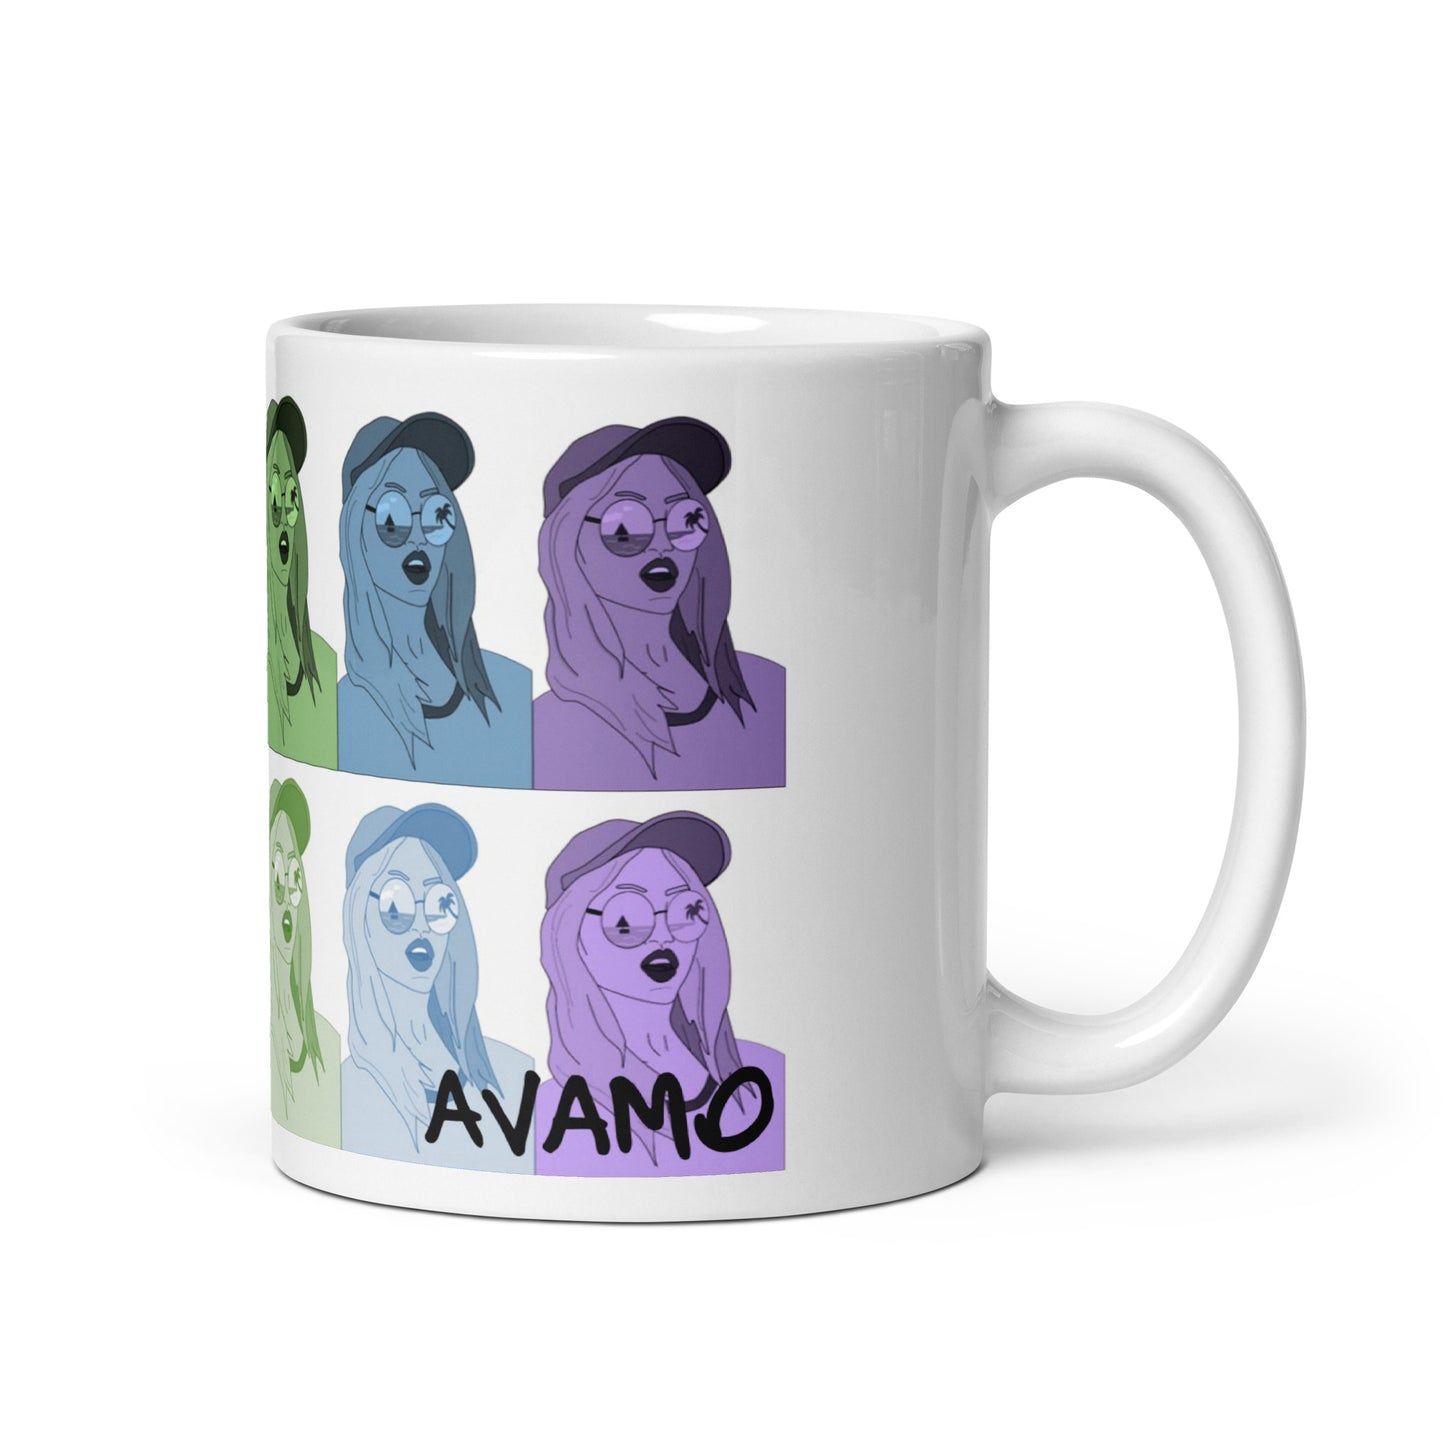 White Avamo glossy mug